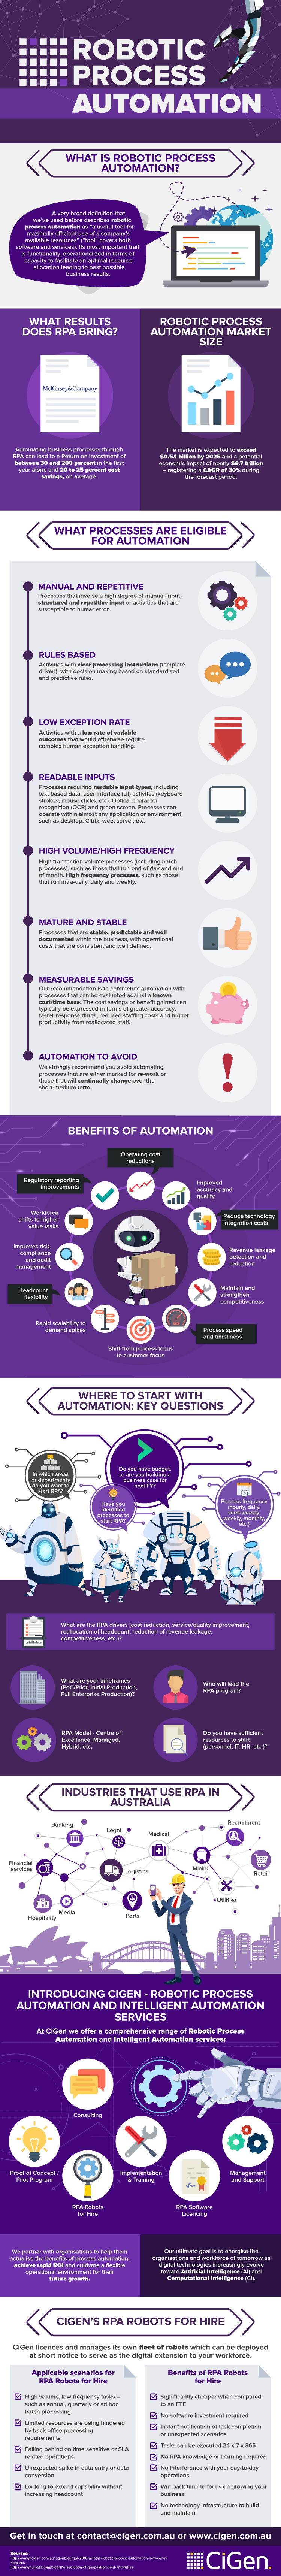 CiGen-RPA-infographic-what-is-robotic-process-automation-2018